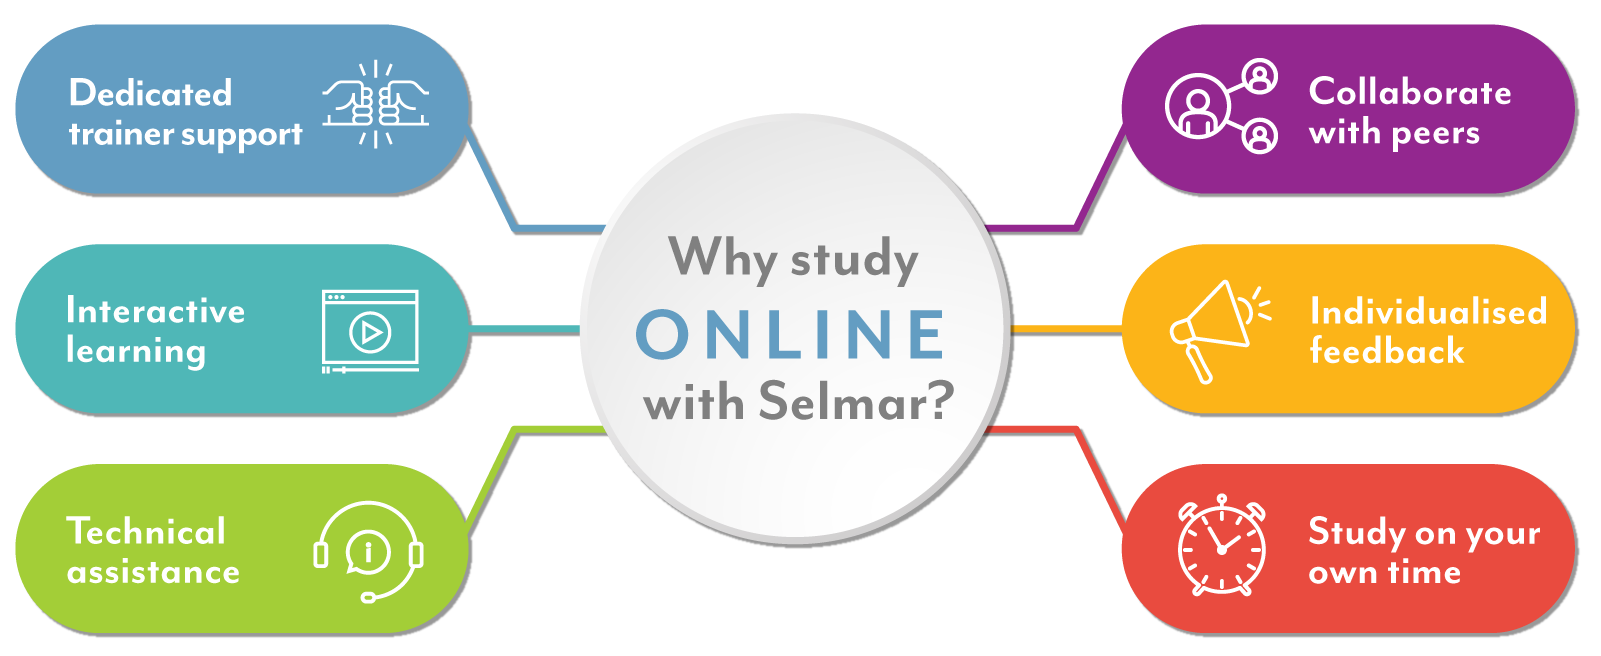 Study online with Selmar